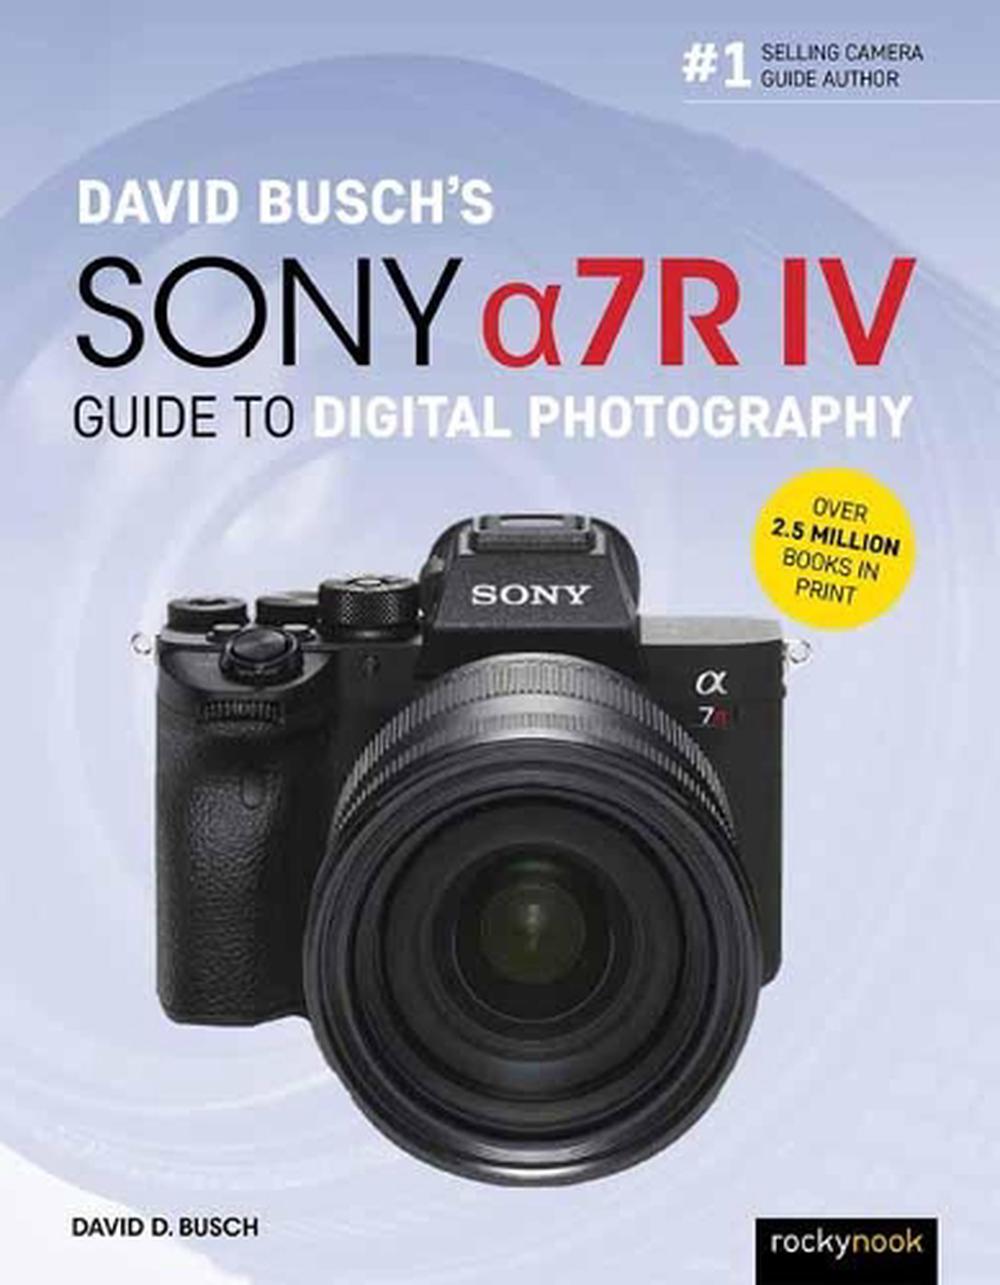 David Busch's Nikon D7500 Guide to Digital SLR Photography - RockyNook